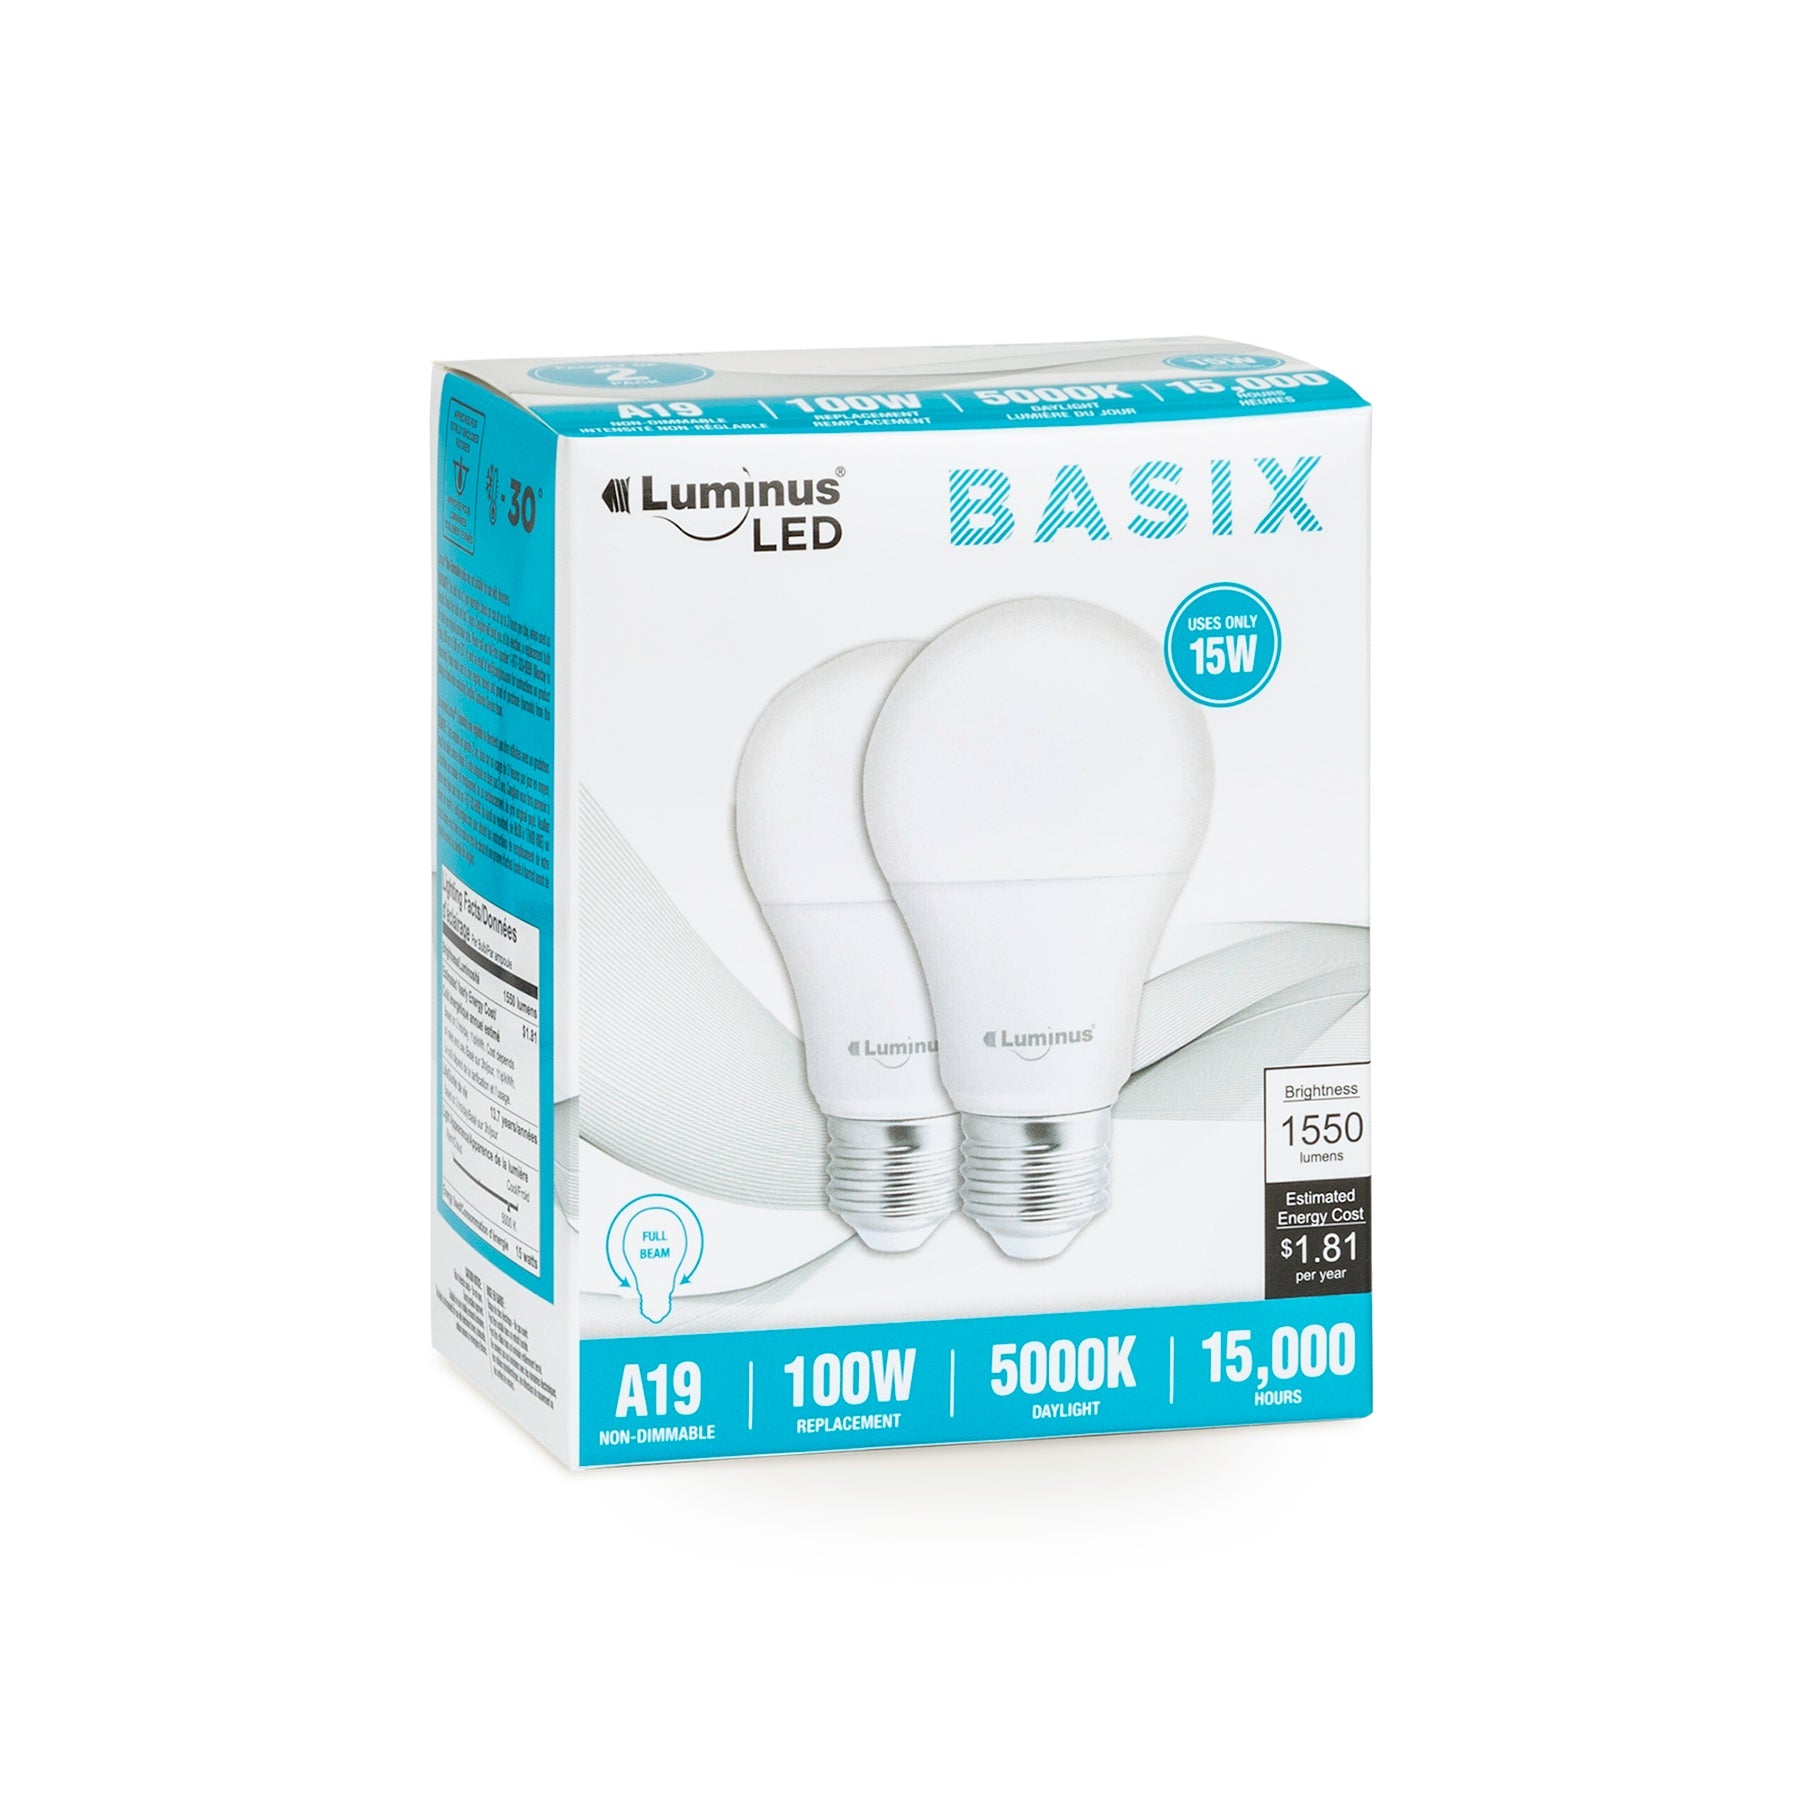 Luminus Led Basix 2pcs Light Bulbs Daylight  A19 5000K 